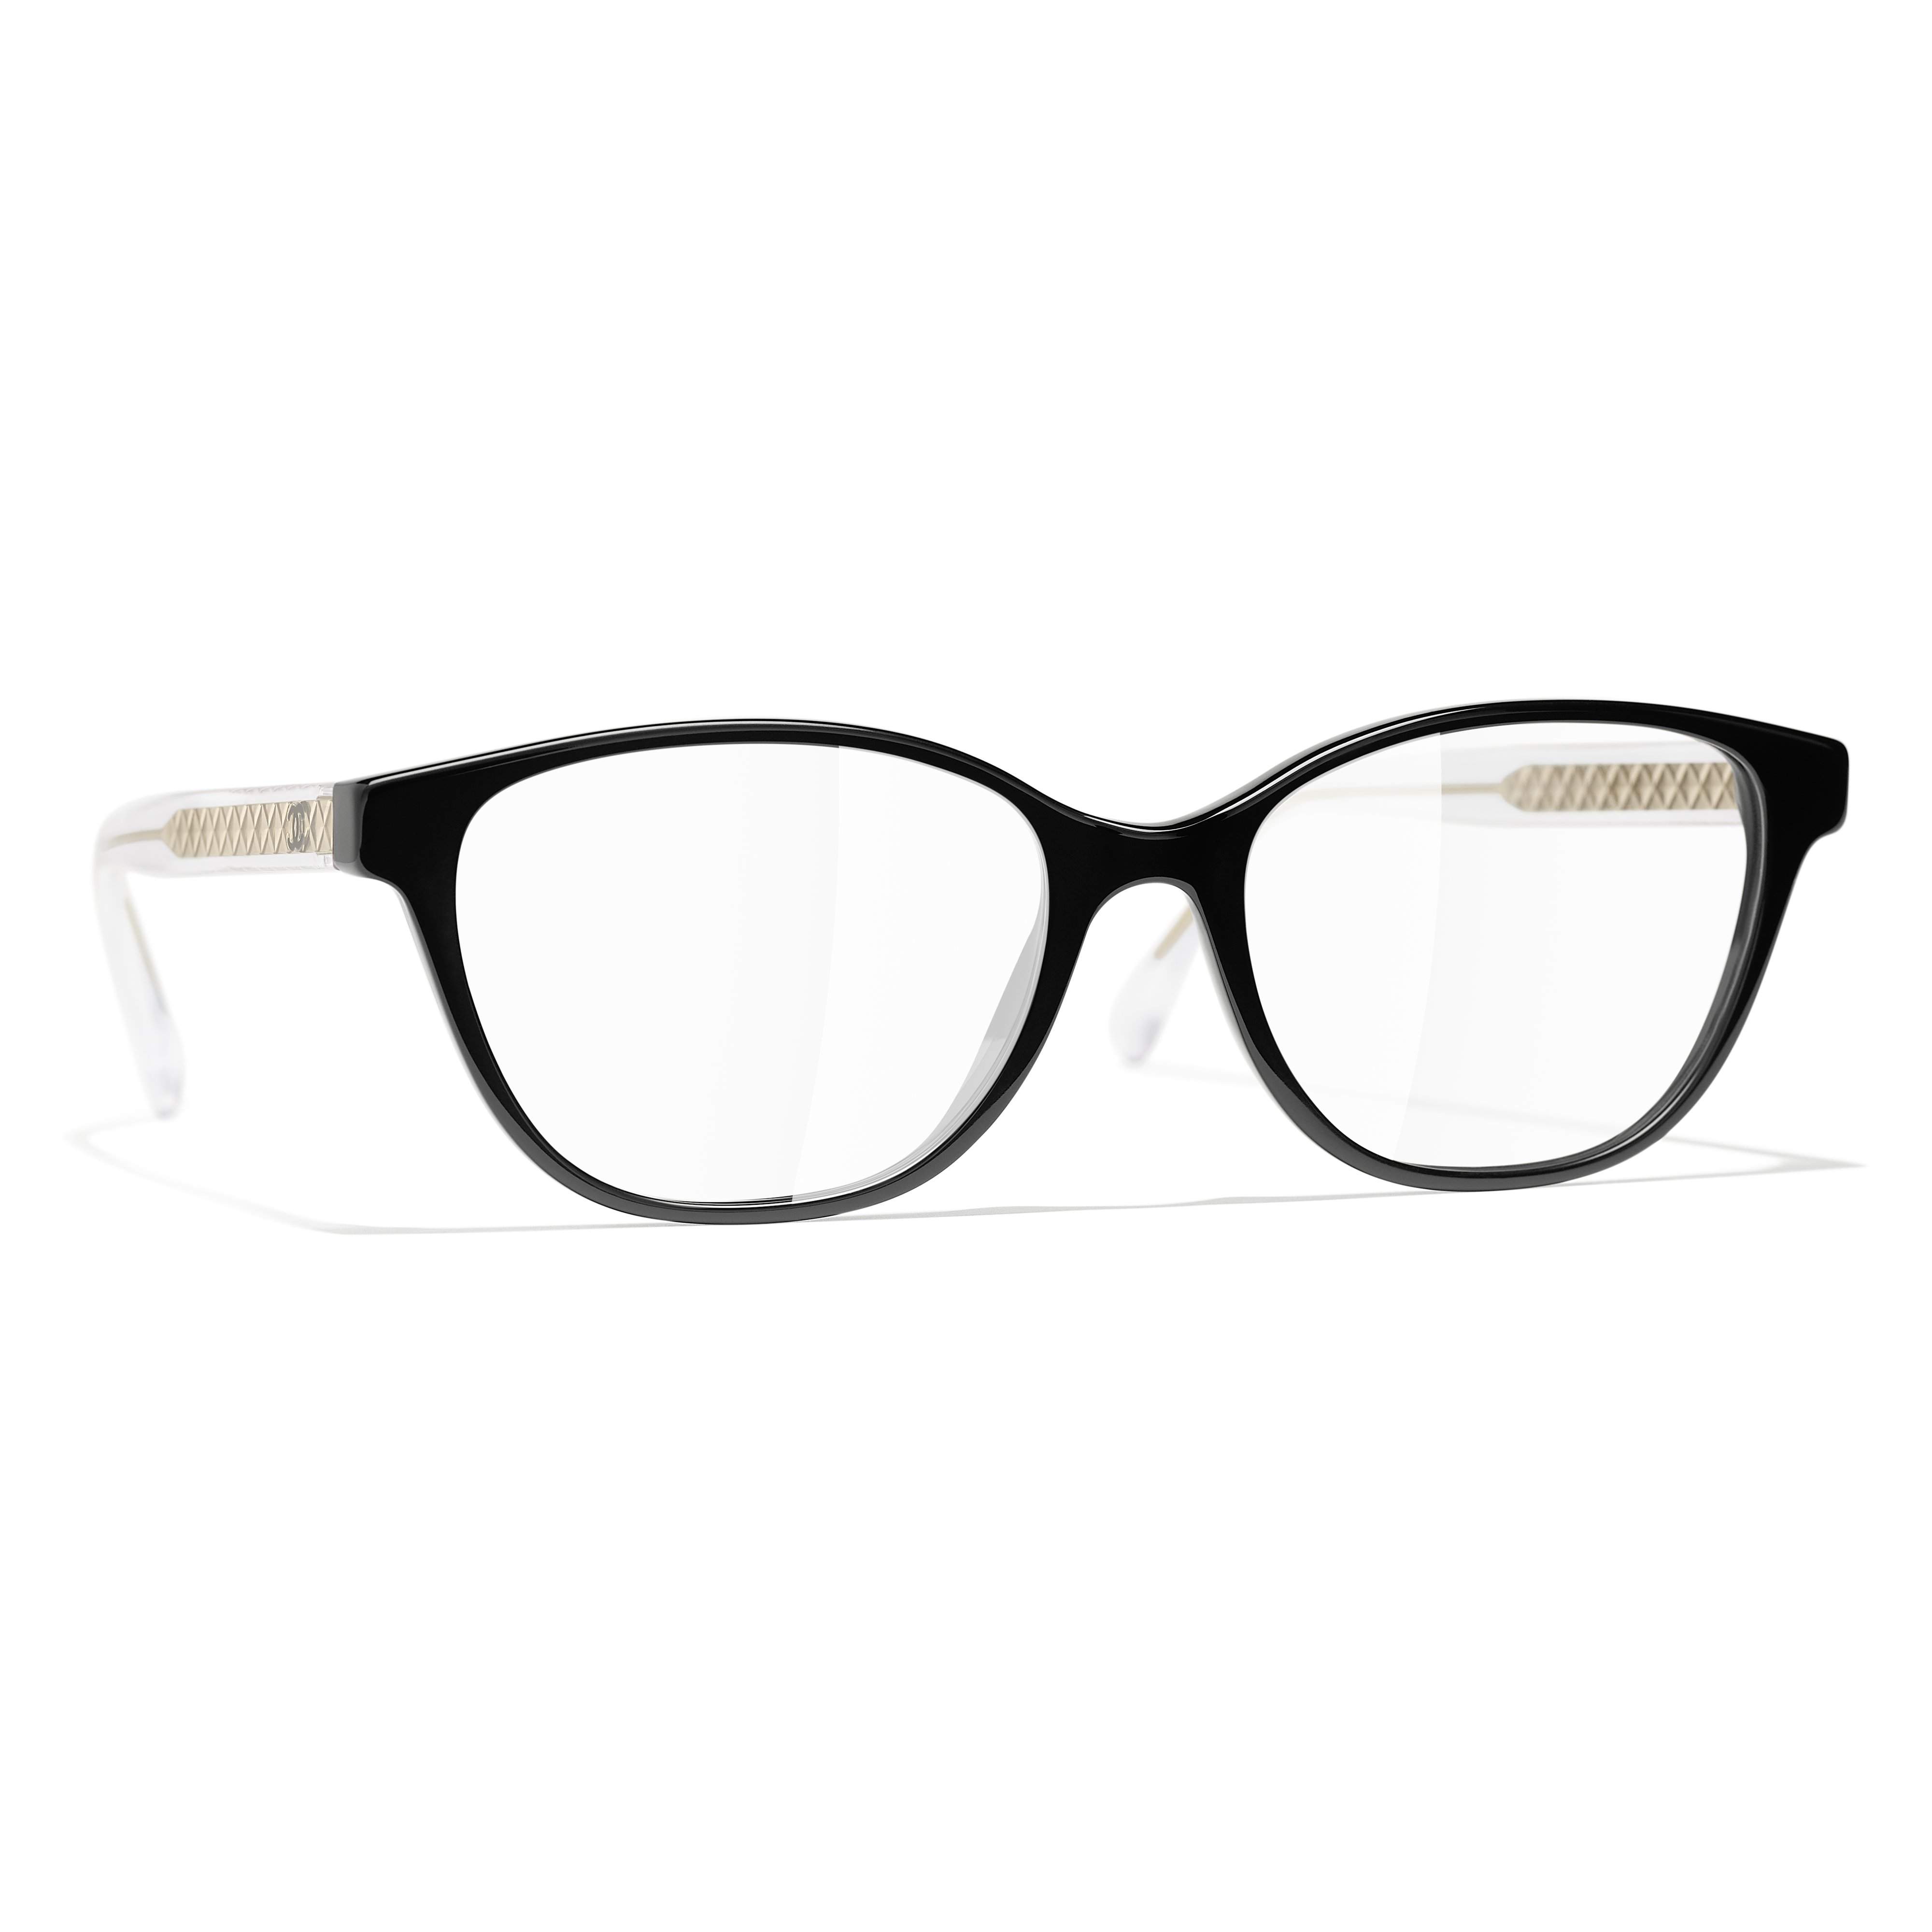 Get the best deals on CHANEL Frame Eyeglass Frames when you shop